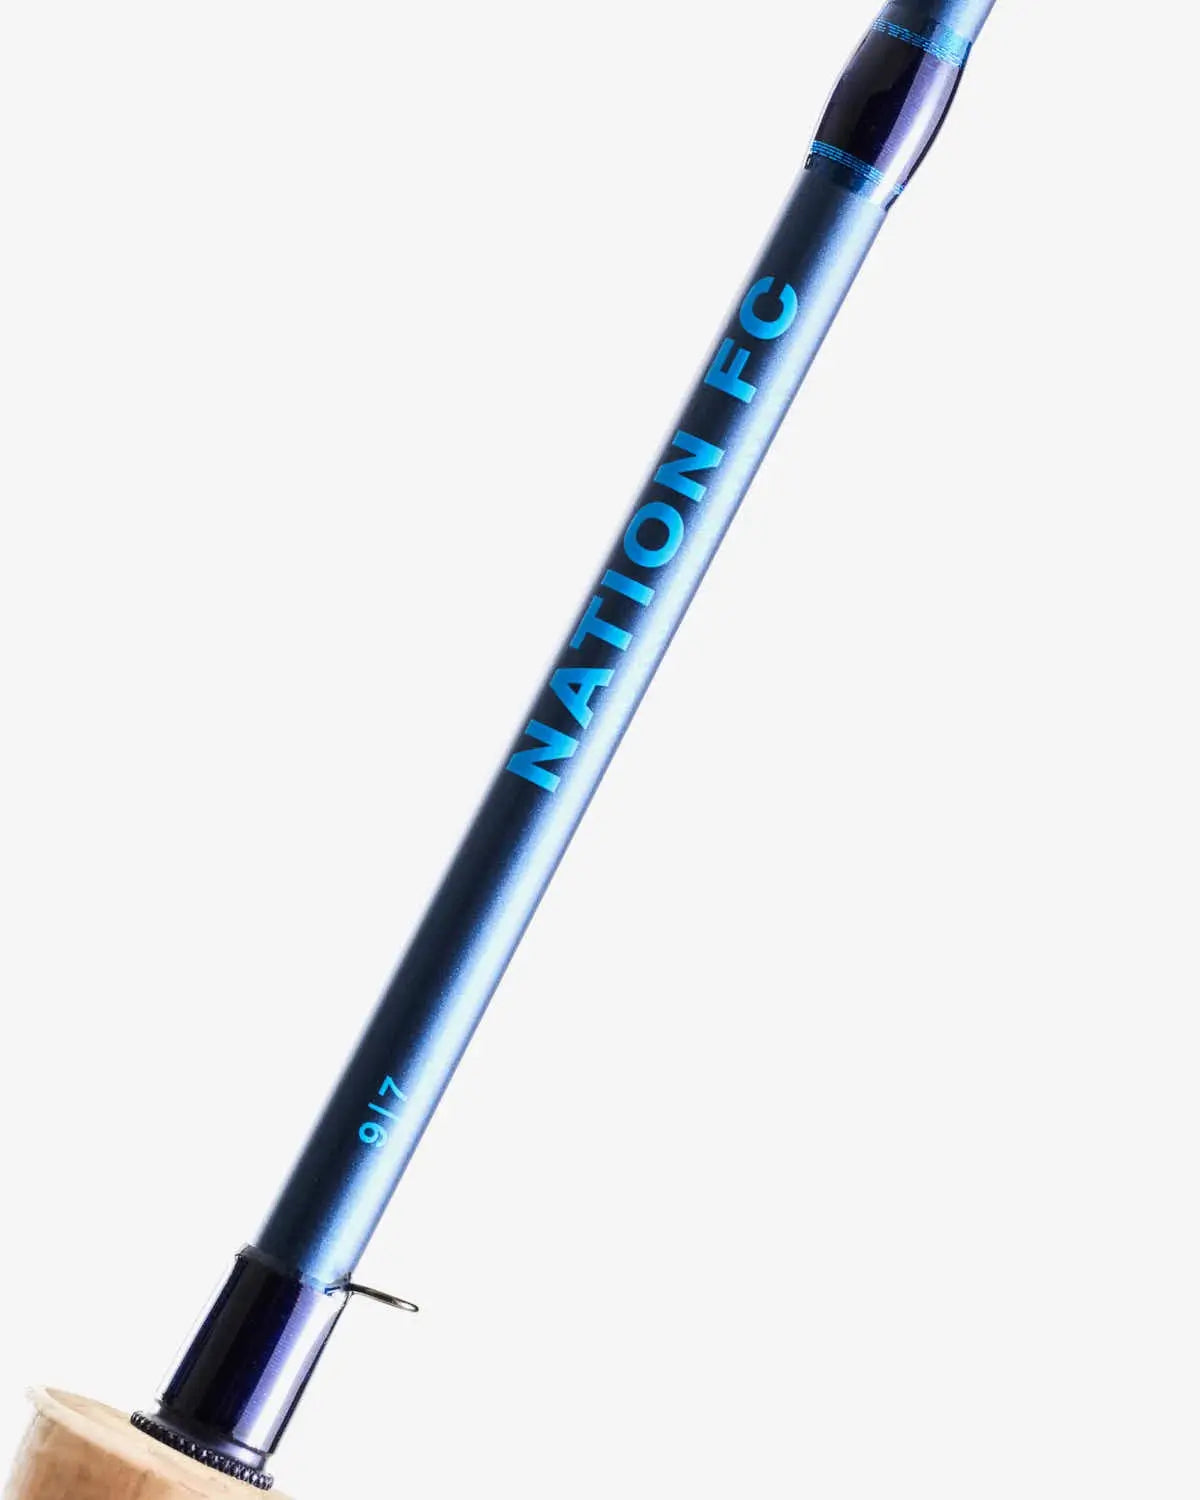 The Streamer Rod 9' - 7WT - 6 Piece